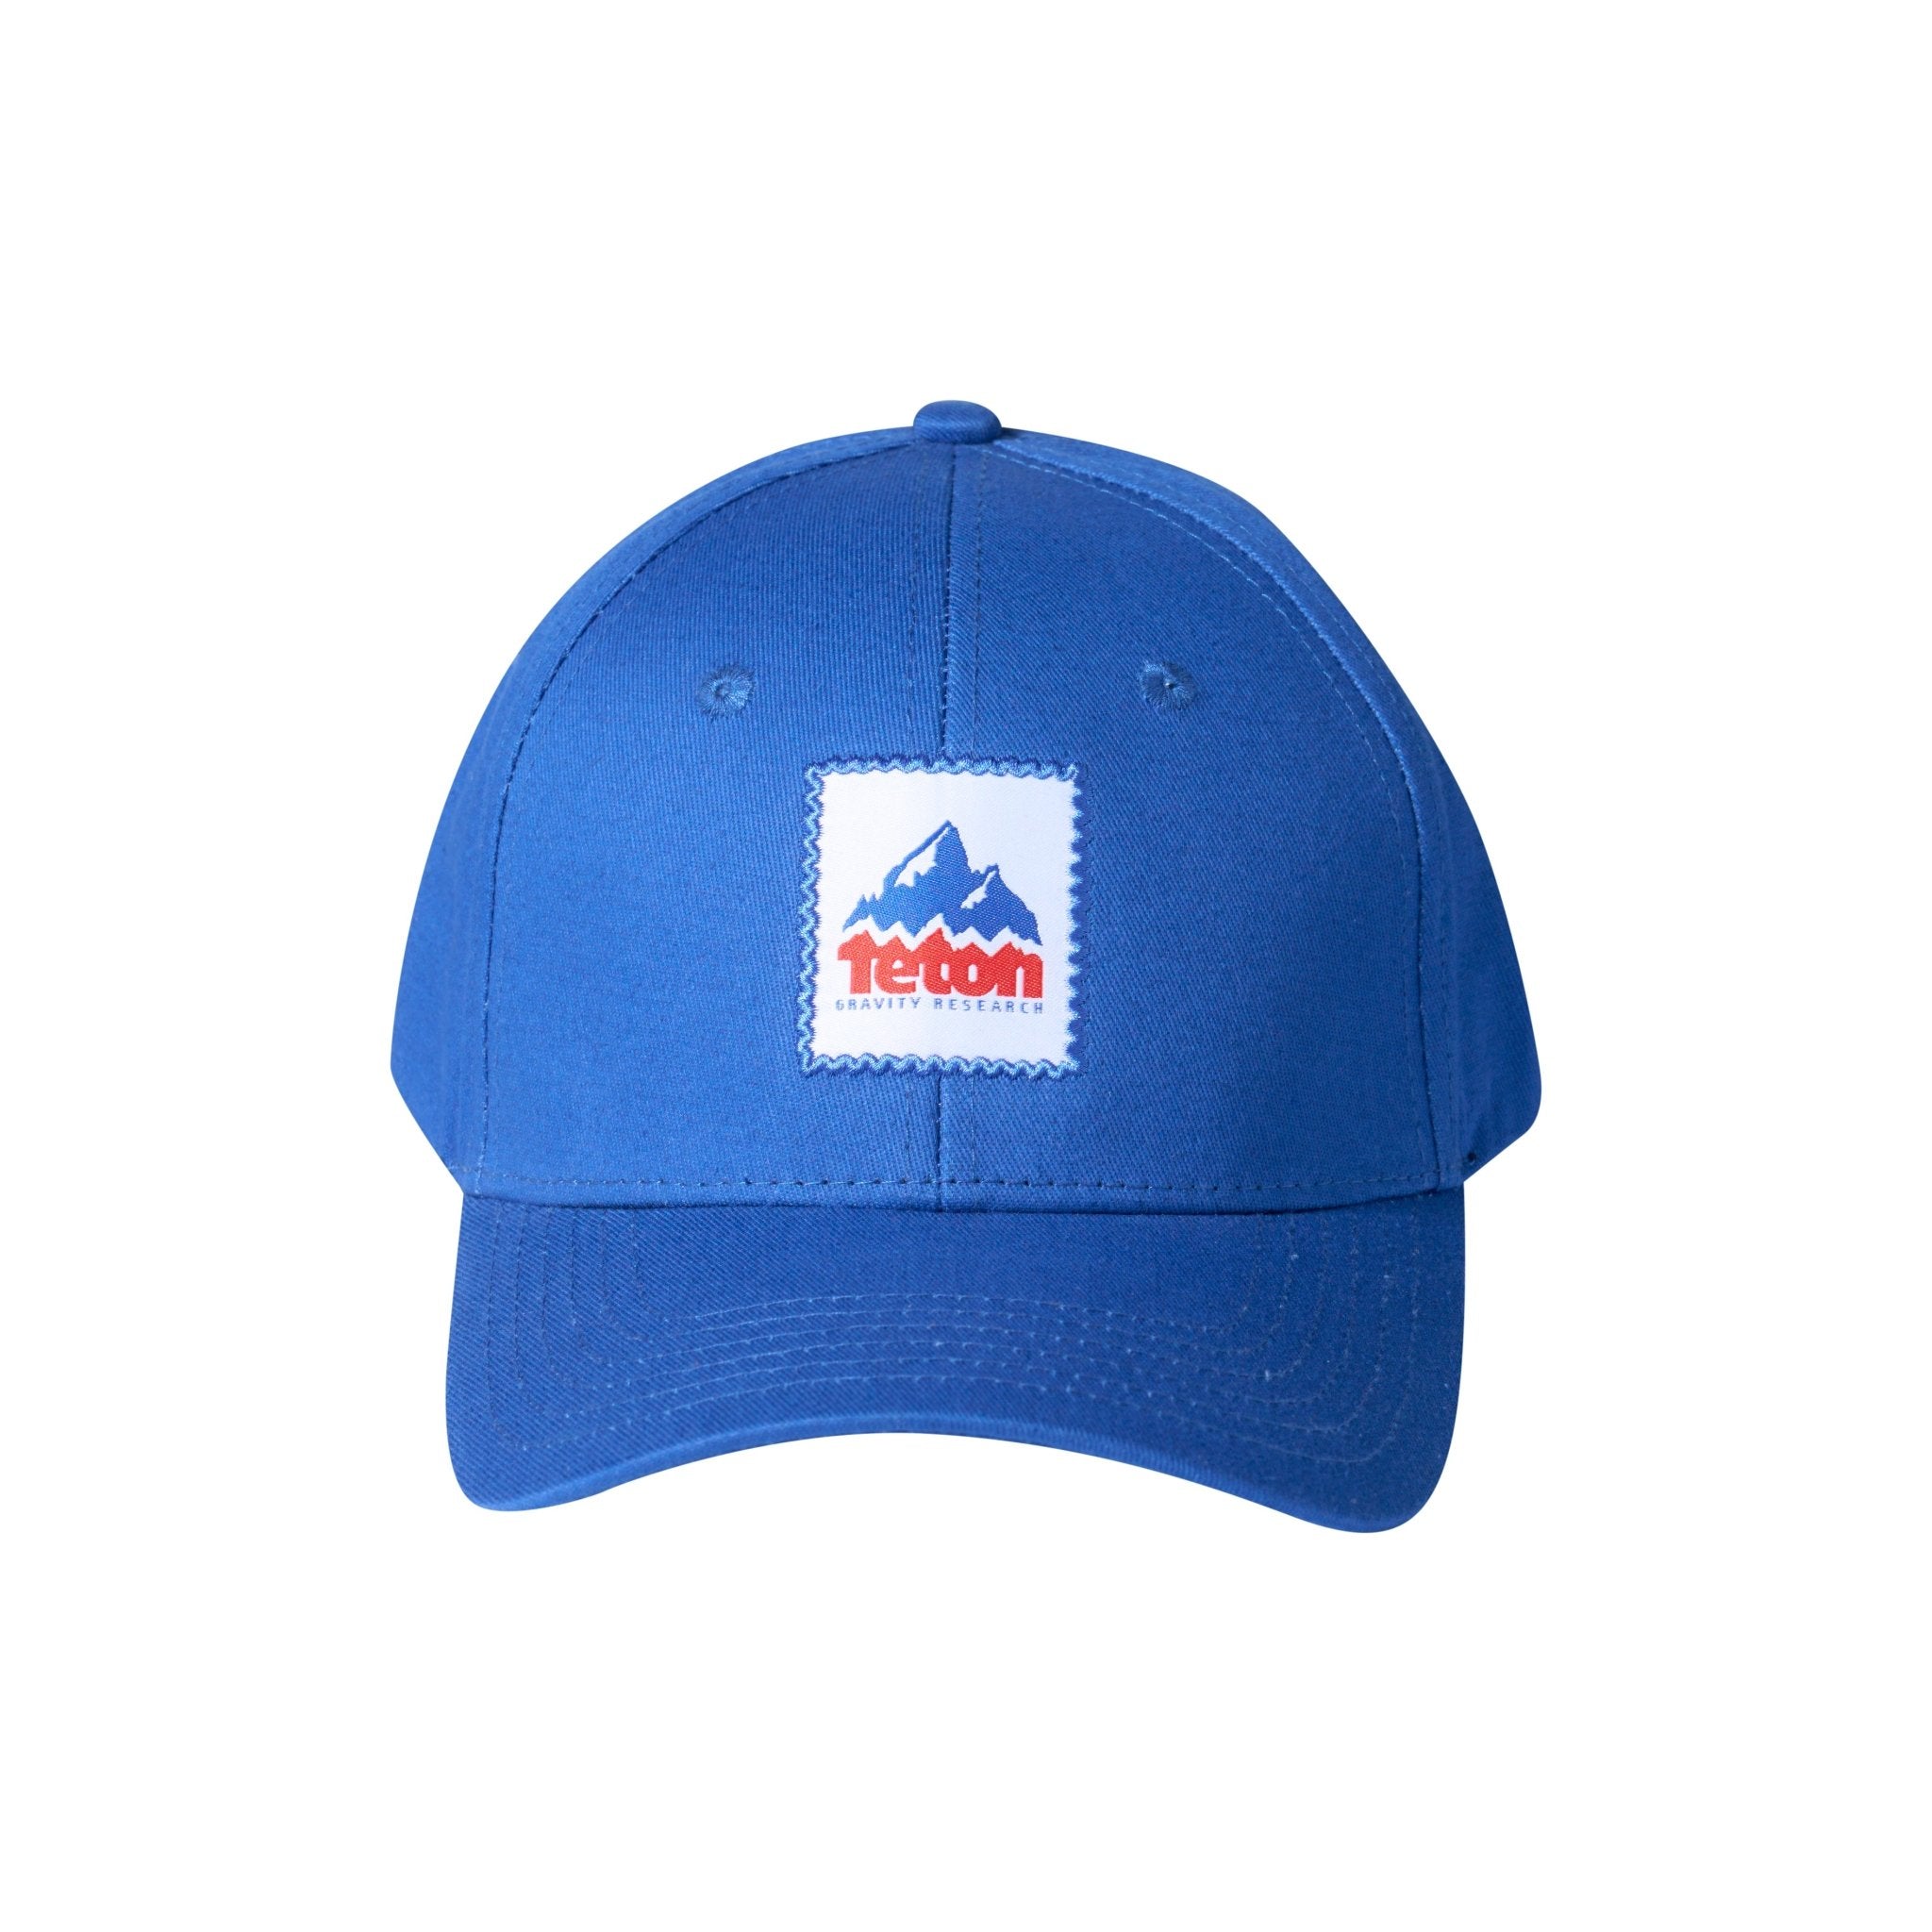 USPS Trucker Snapback Cap Mailman Hat Navy